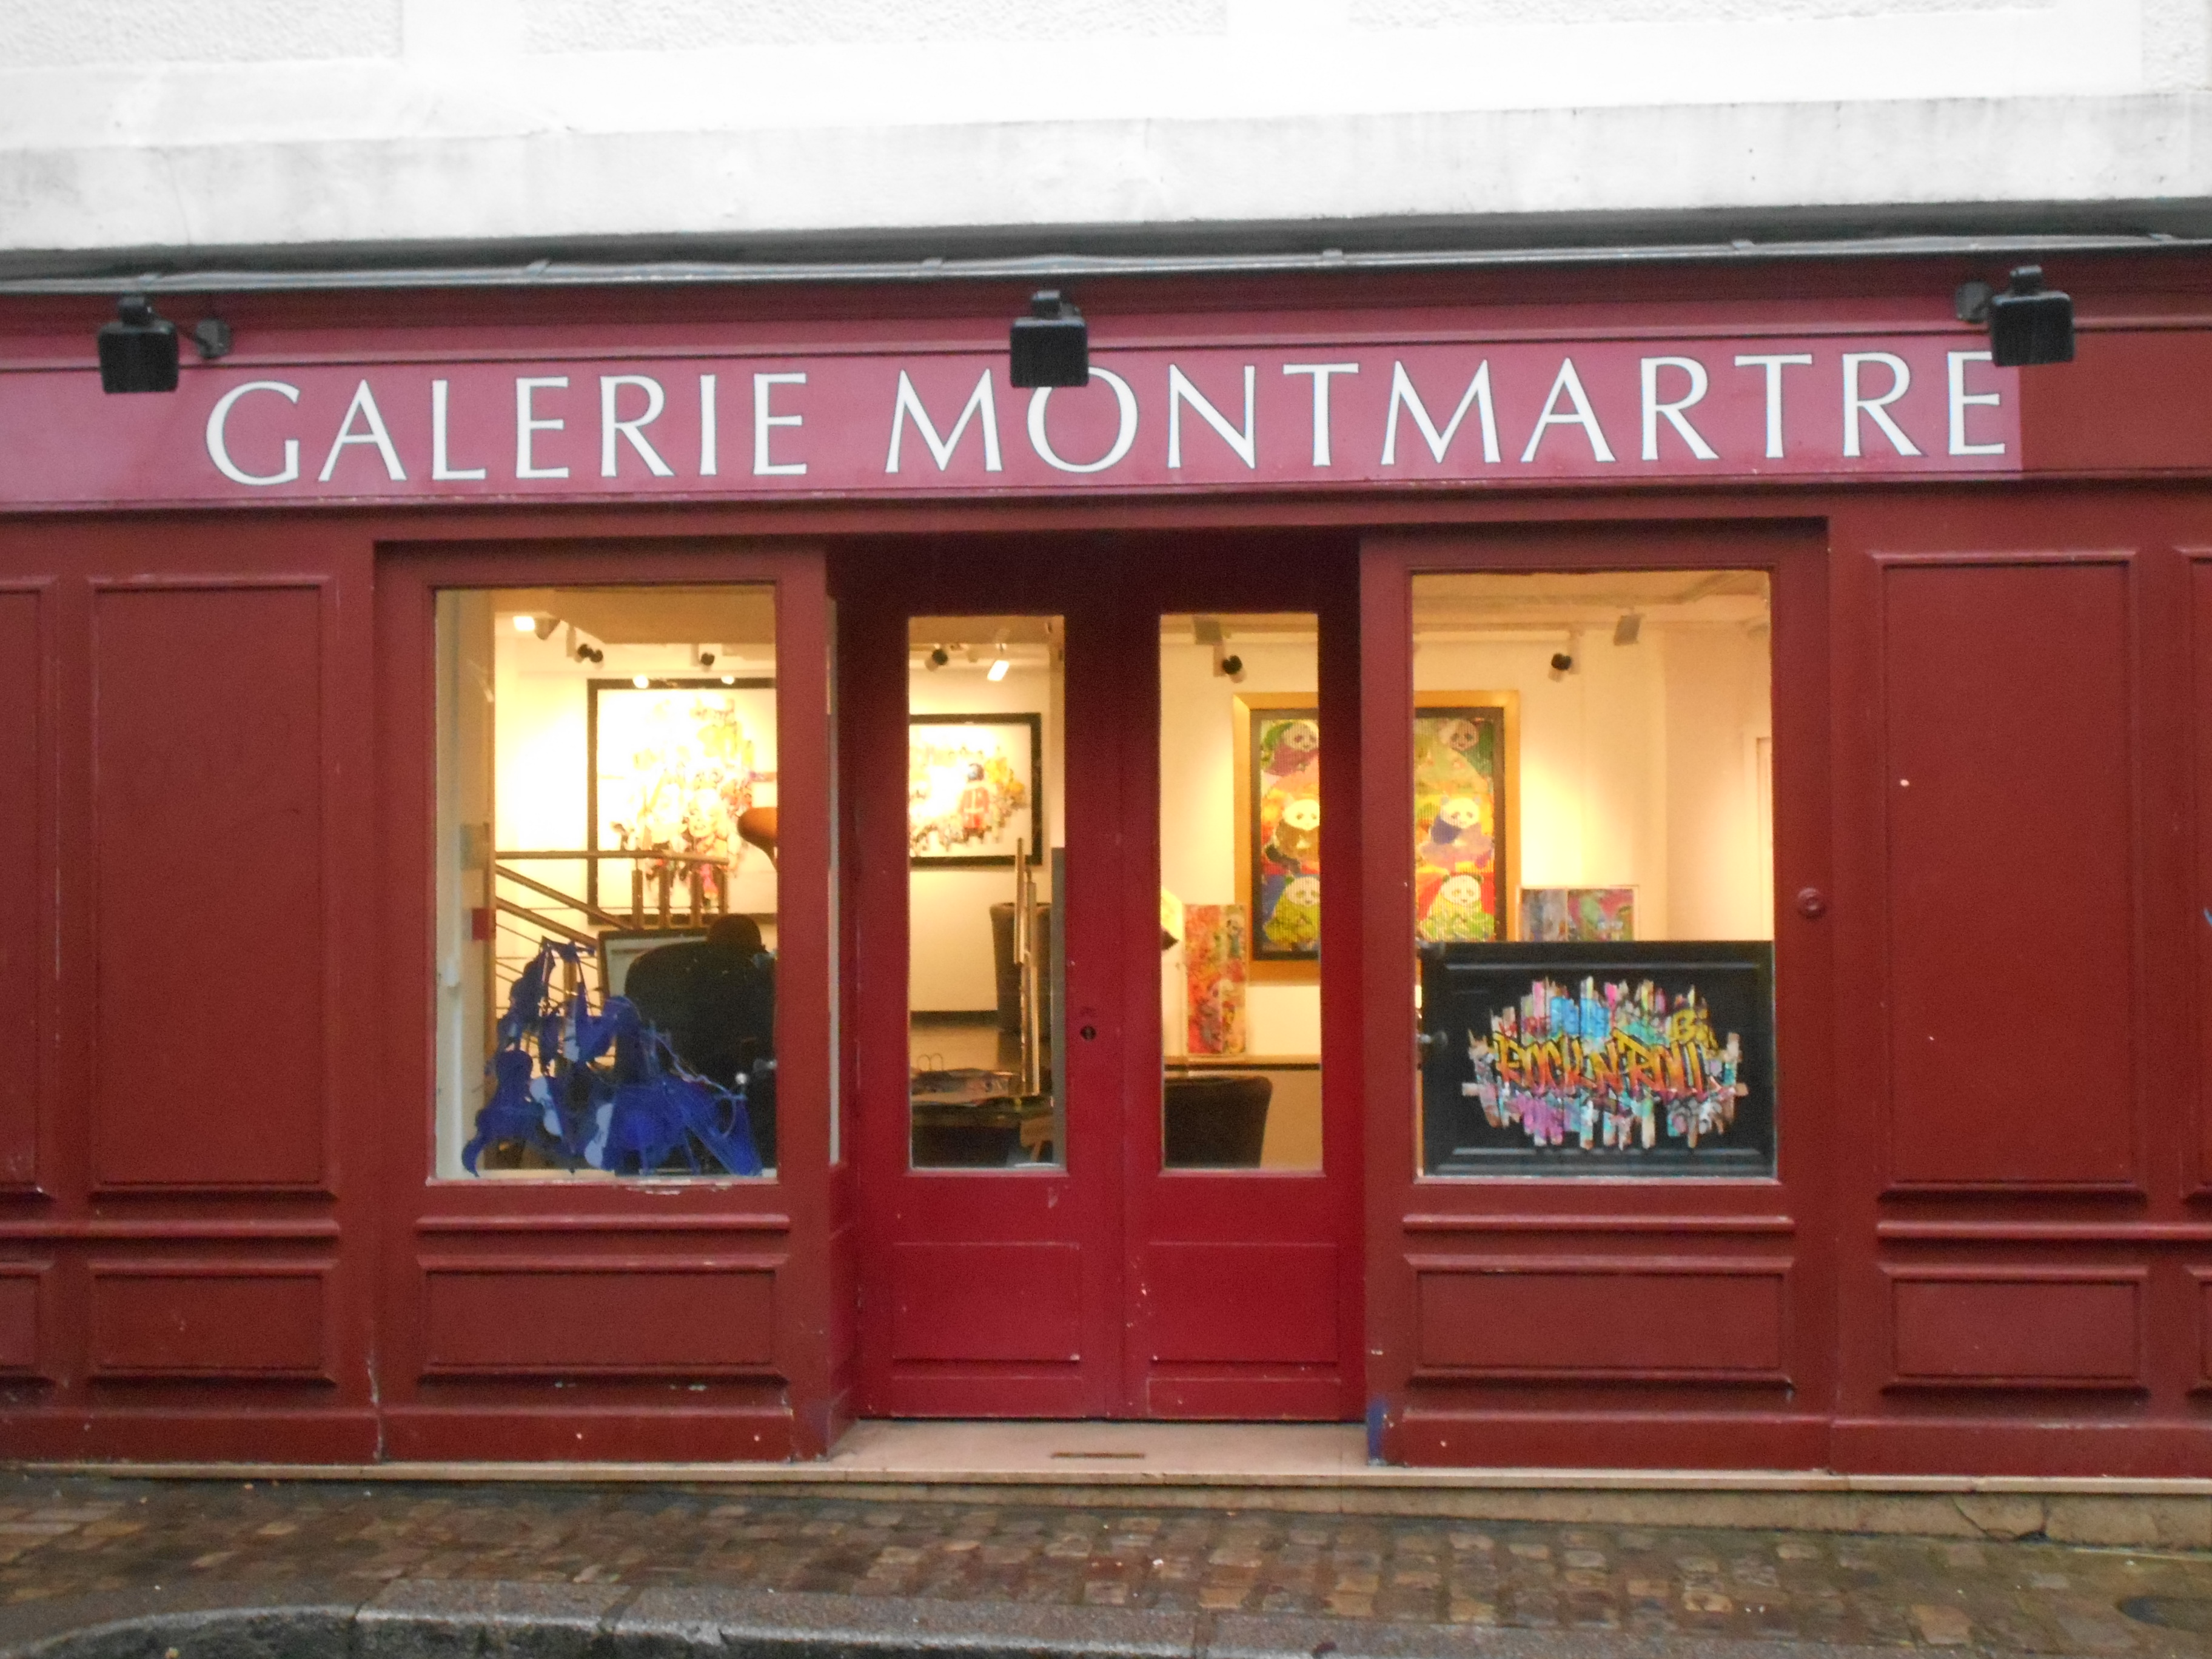 Galerie Montmartre in Paris